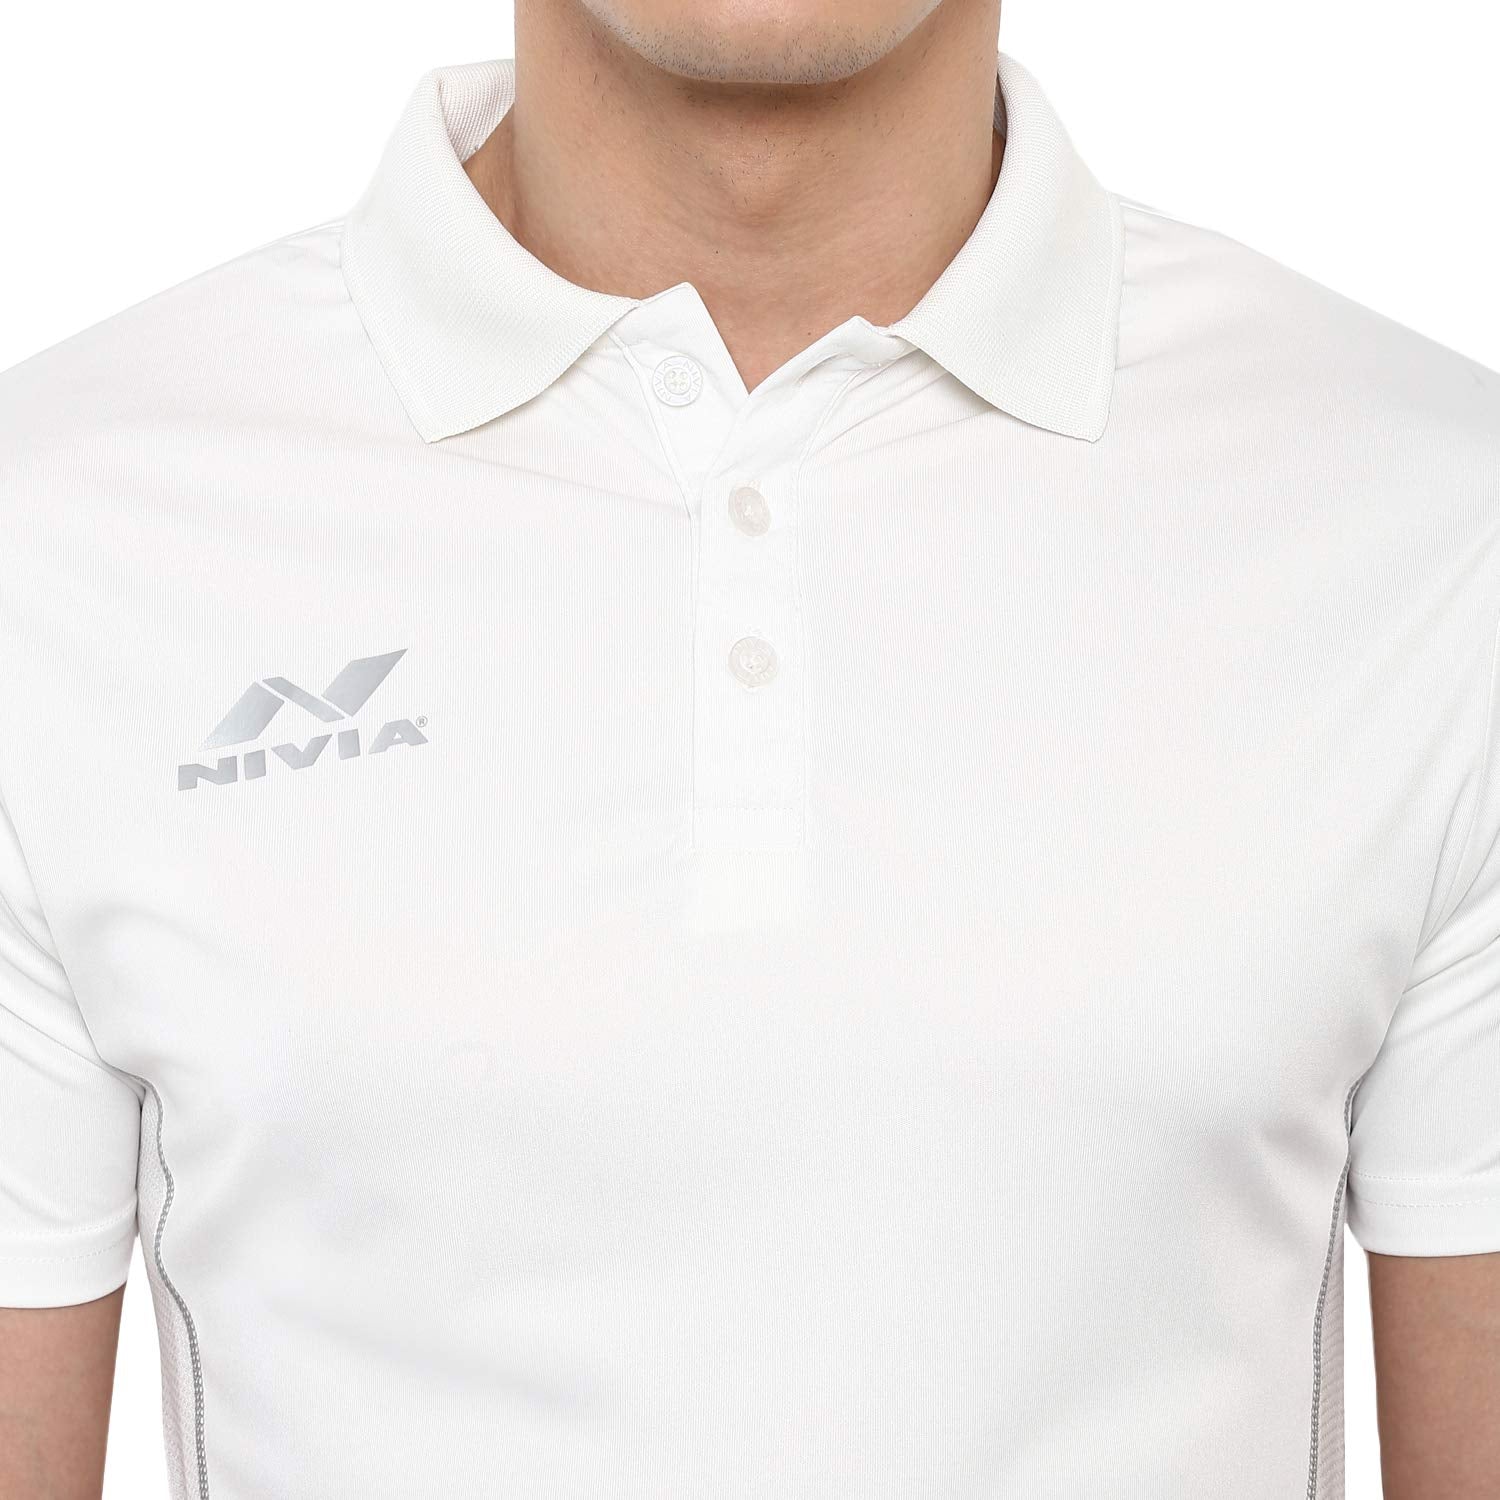 Nivia 2503 Polyester Cricket Jersey for Men (White/Grey) - Best Price online Prokicksports.com